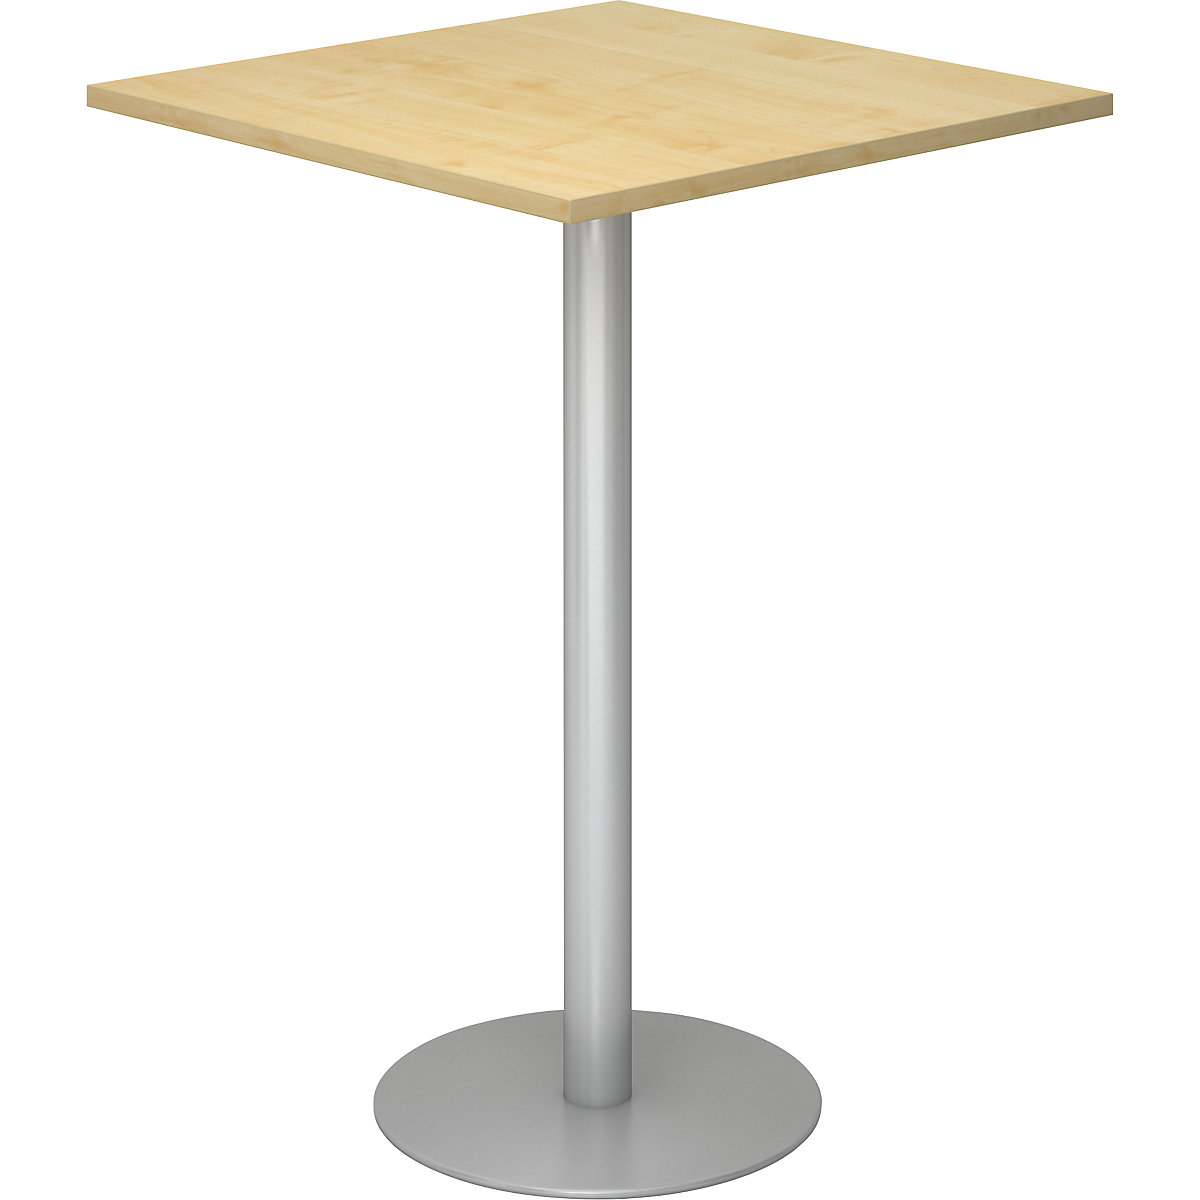 Barový stůl, d x š 800 x 800 mm, výška 1116 mm, stříbrný podstavec, deska javorový dekor